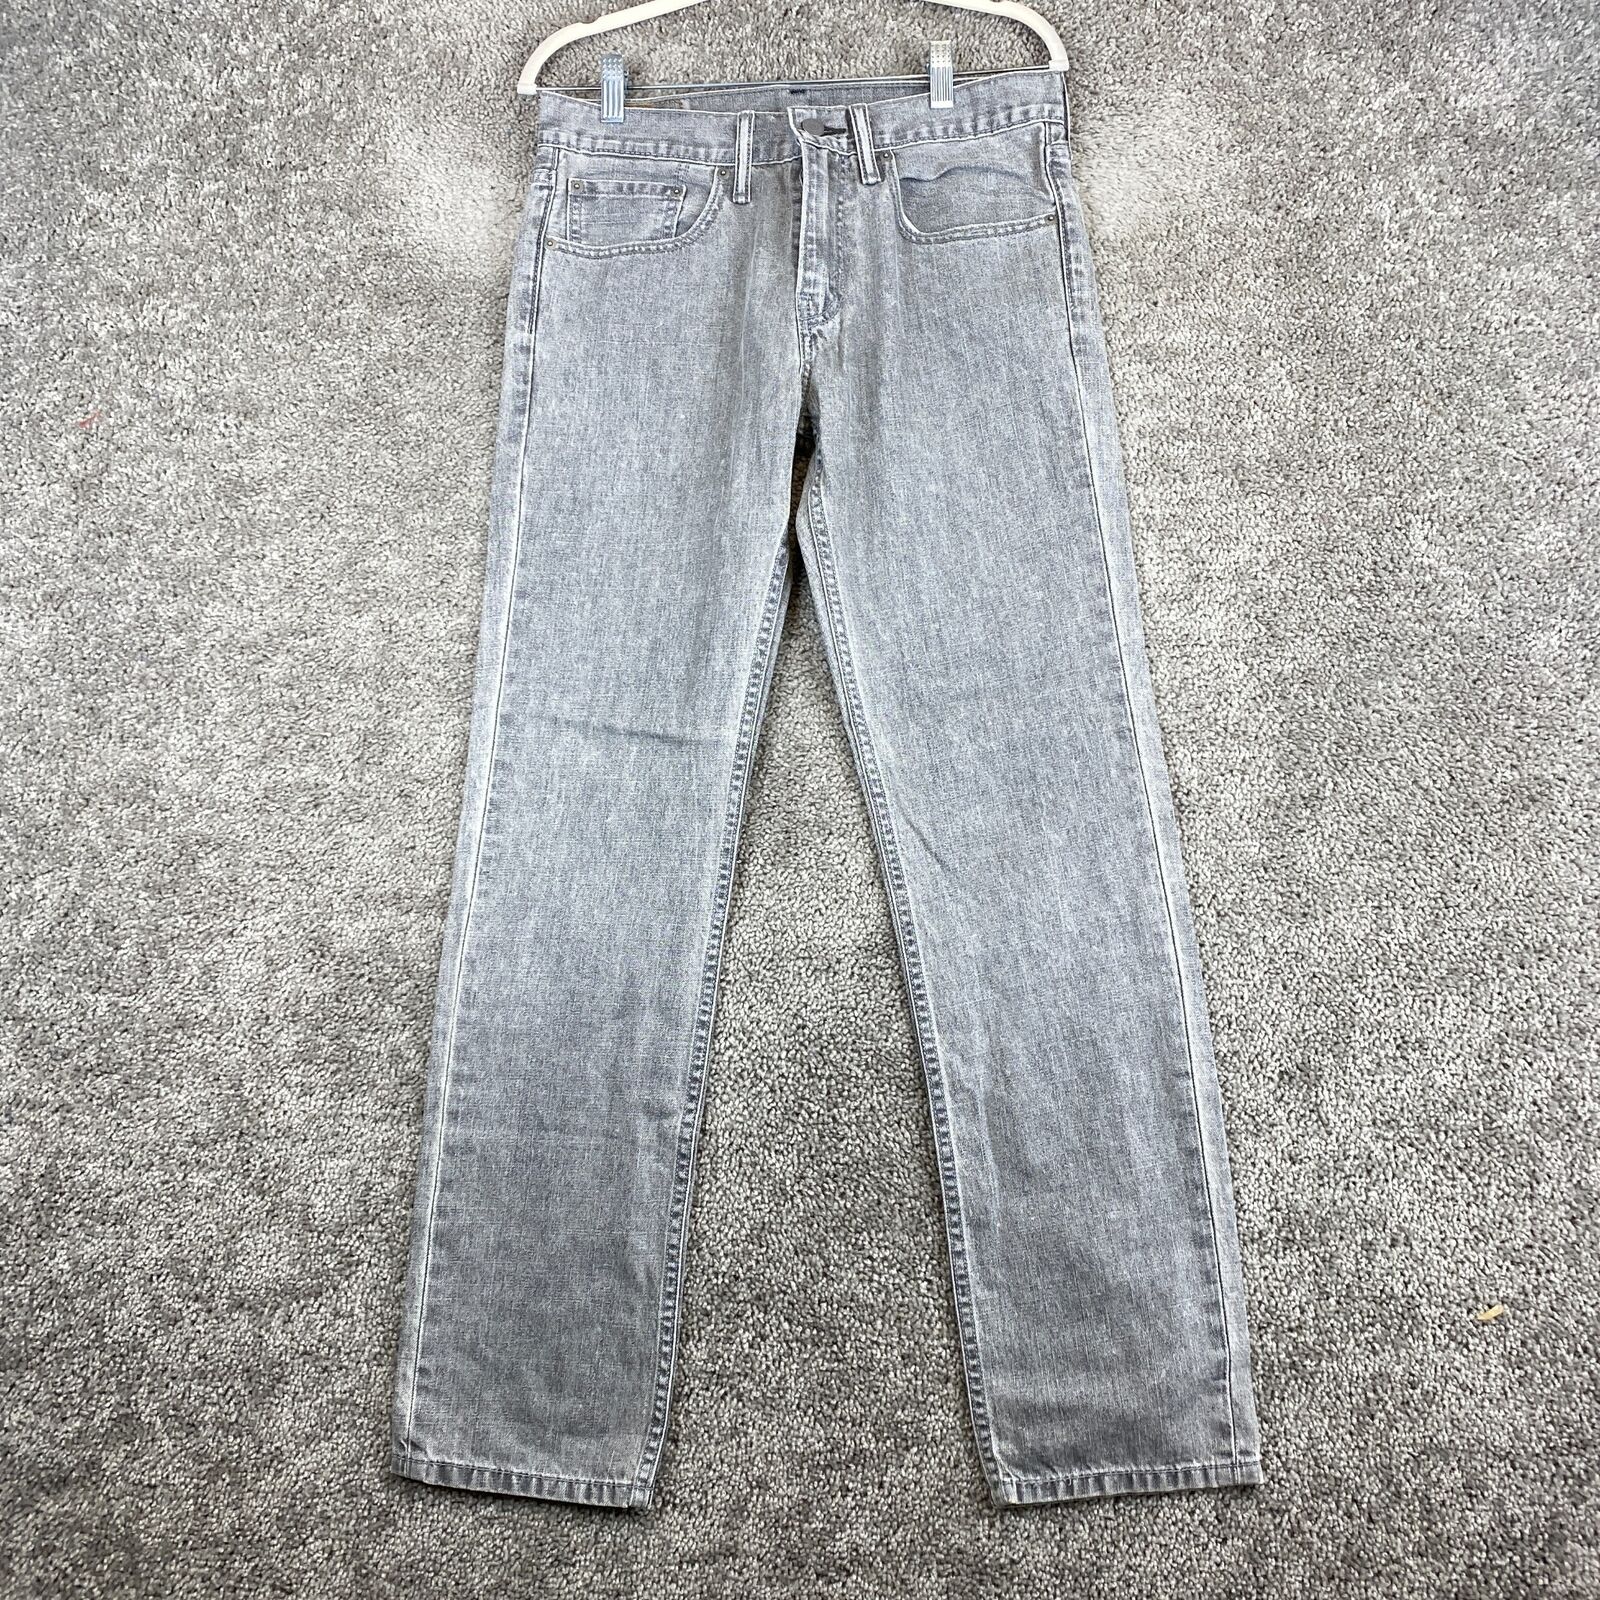 Levi's 511 Slim Fit Straight Leg Jeans Men's W31 L32 Grey Charcoal Wash  Cotton | eBay